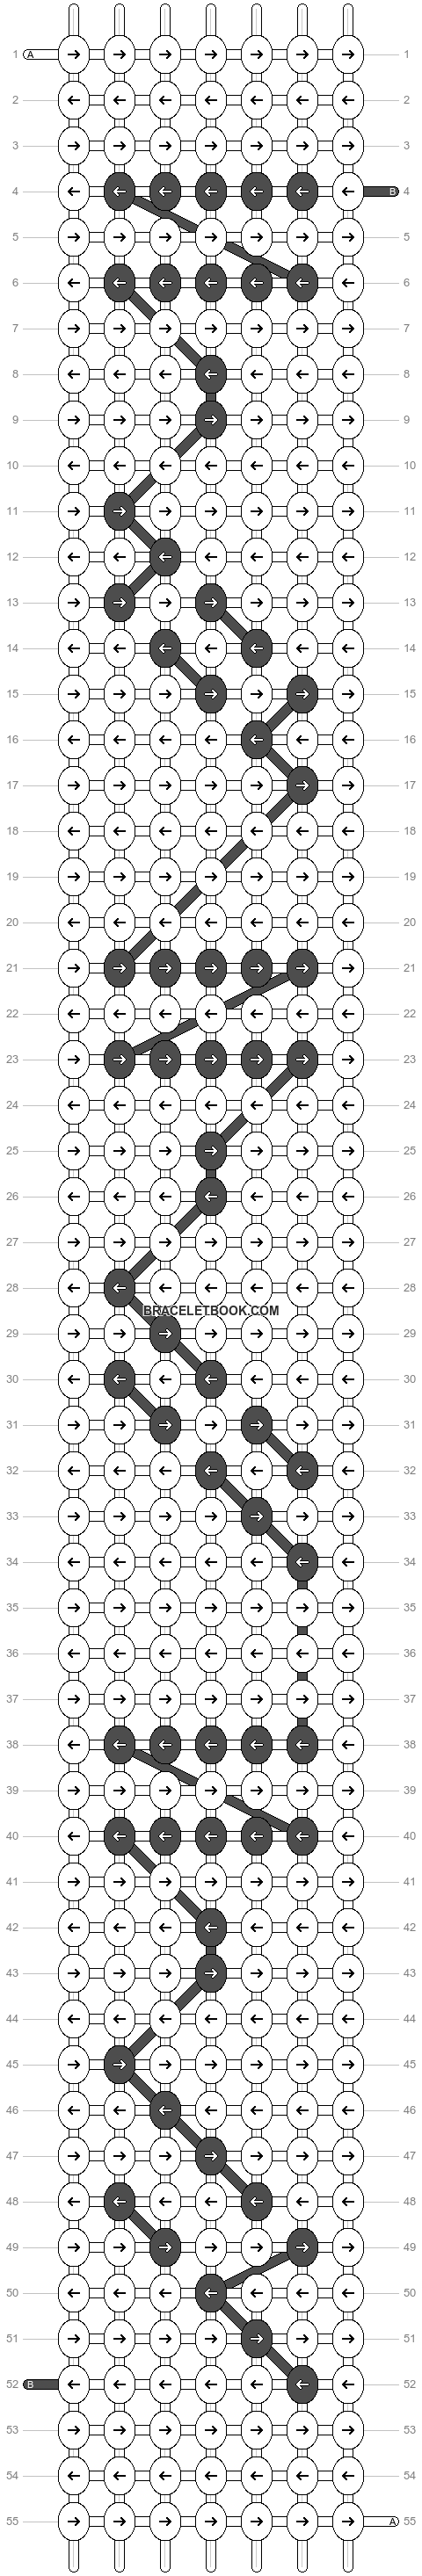 Alpha pattern #70998 variation #130685 pattern